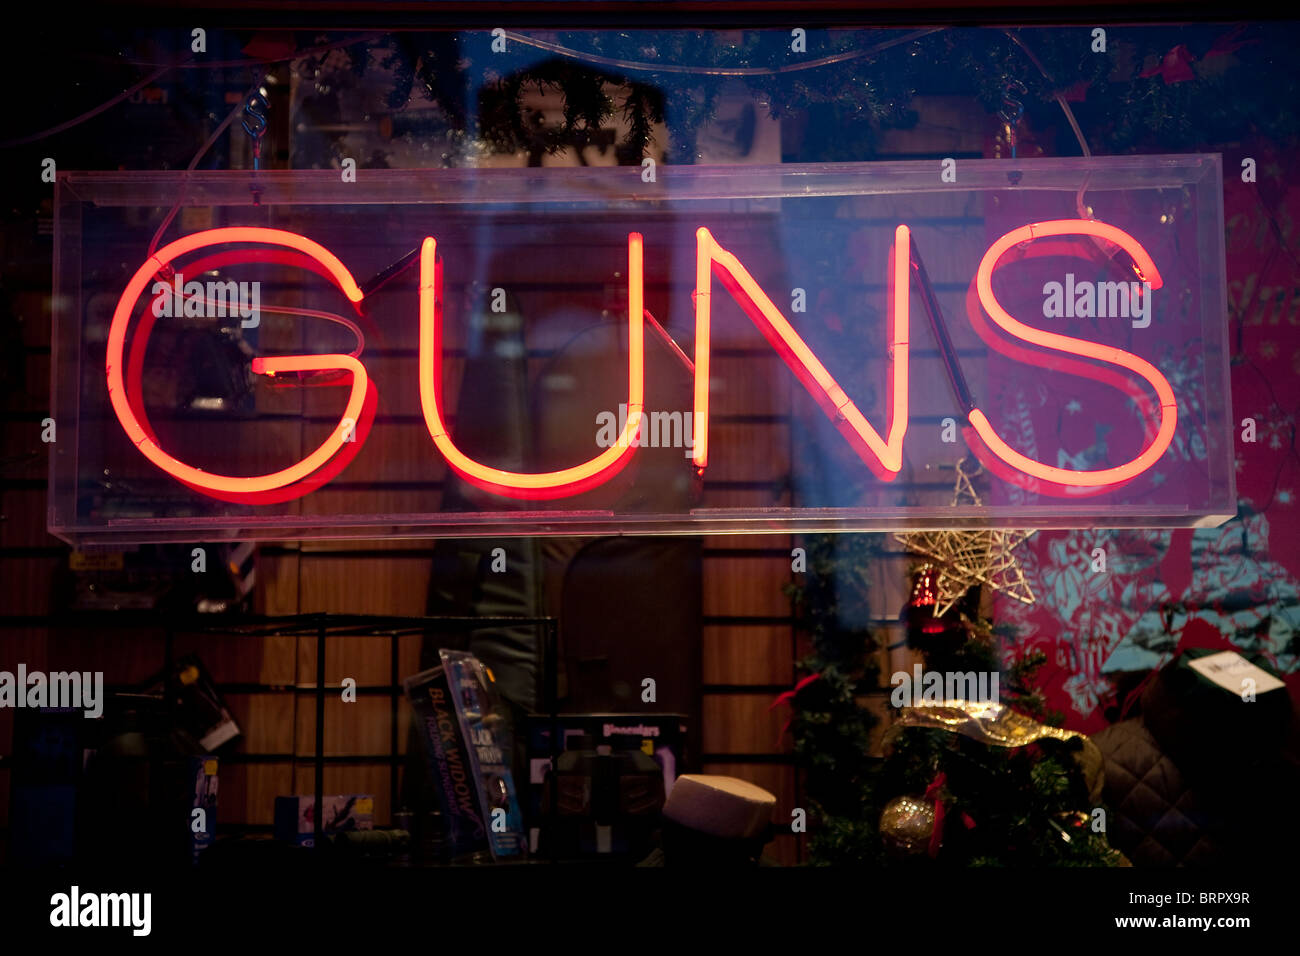 Shop window sign advertising guns for sale. Photo:Jeff Gilbert Stock Photo